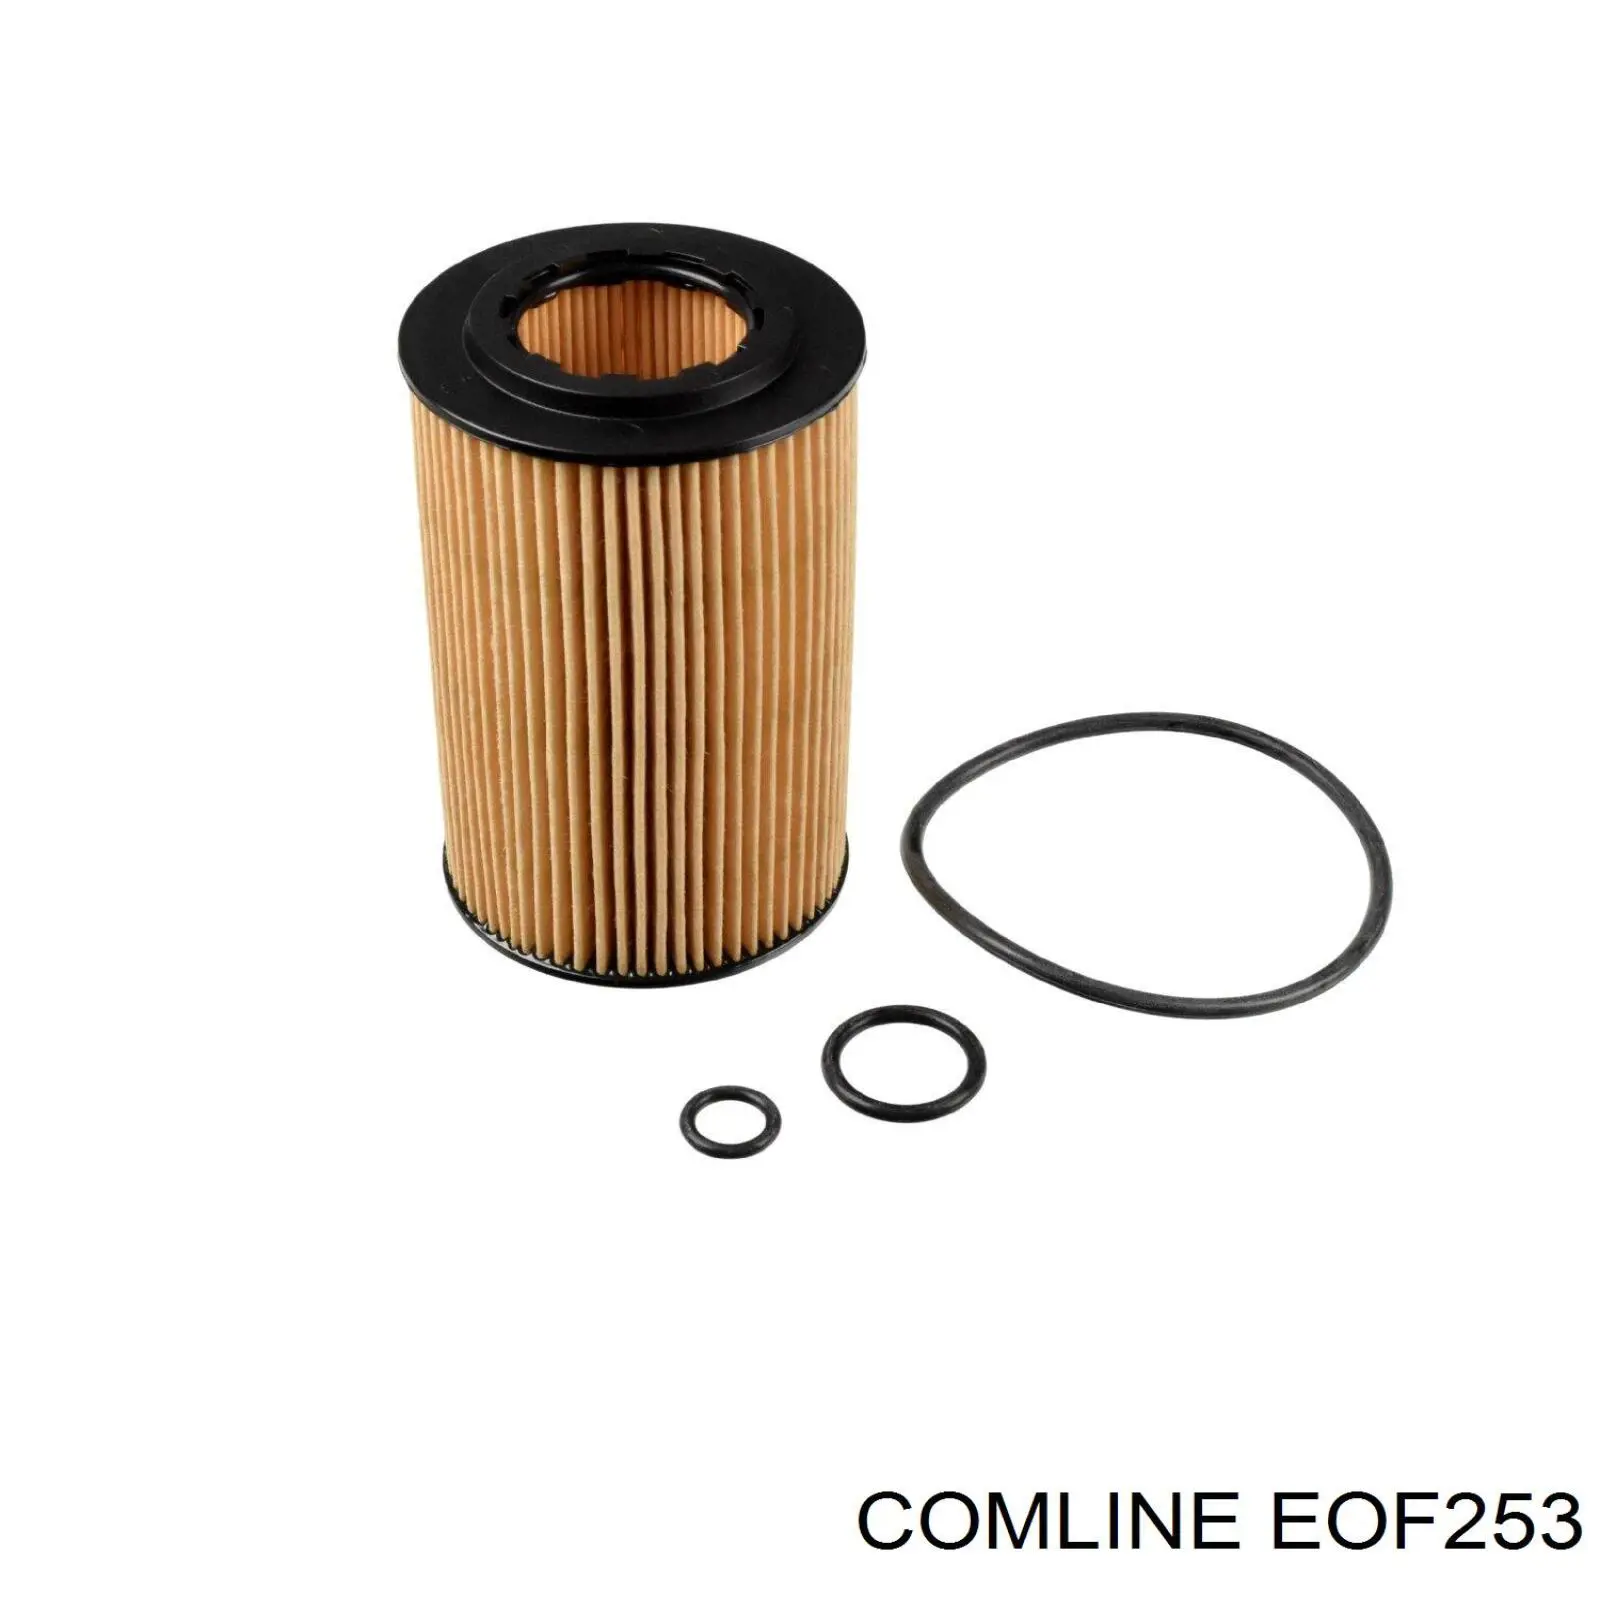 EOF253 Comline filtro de aceite